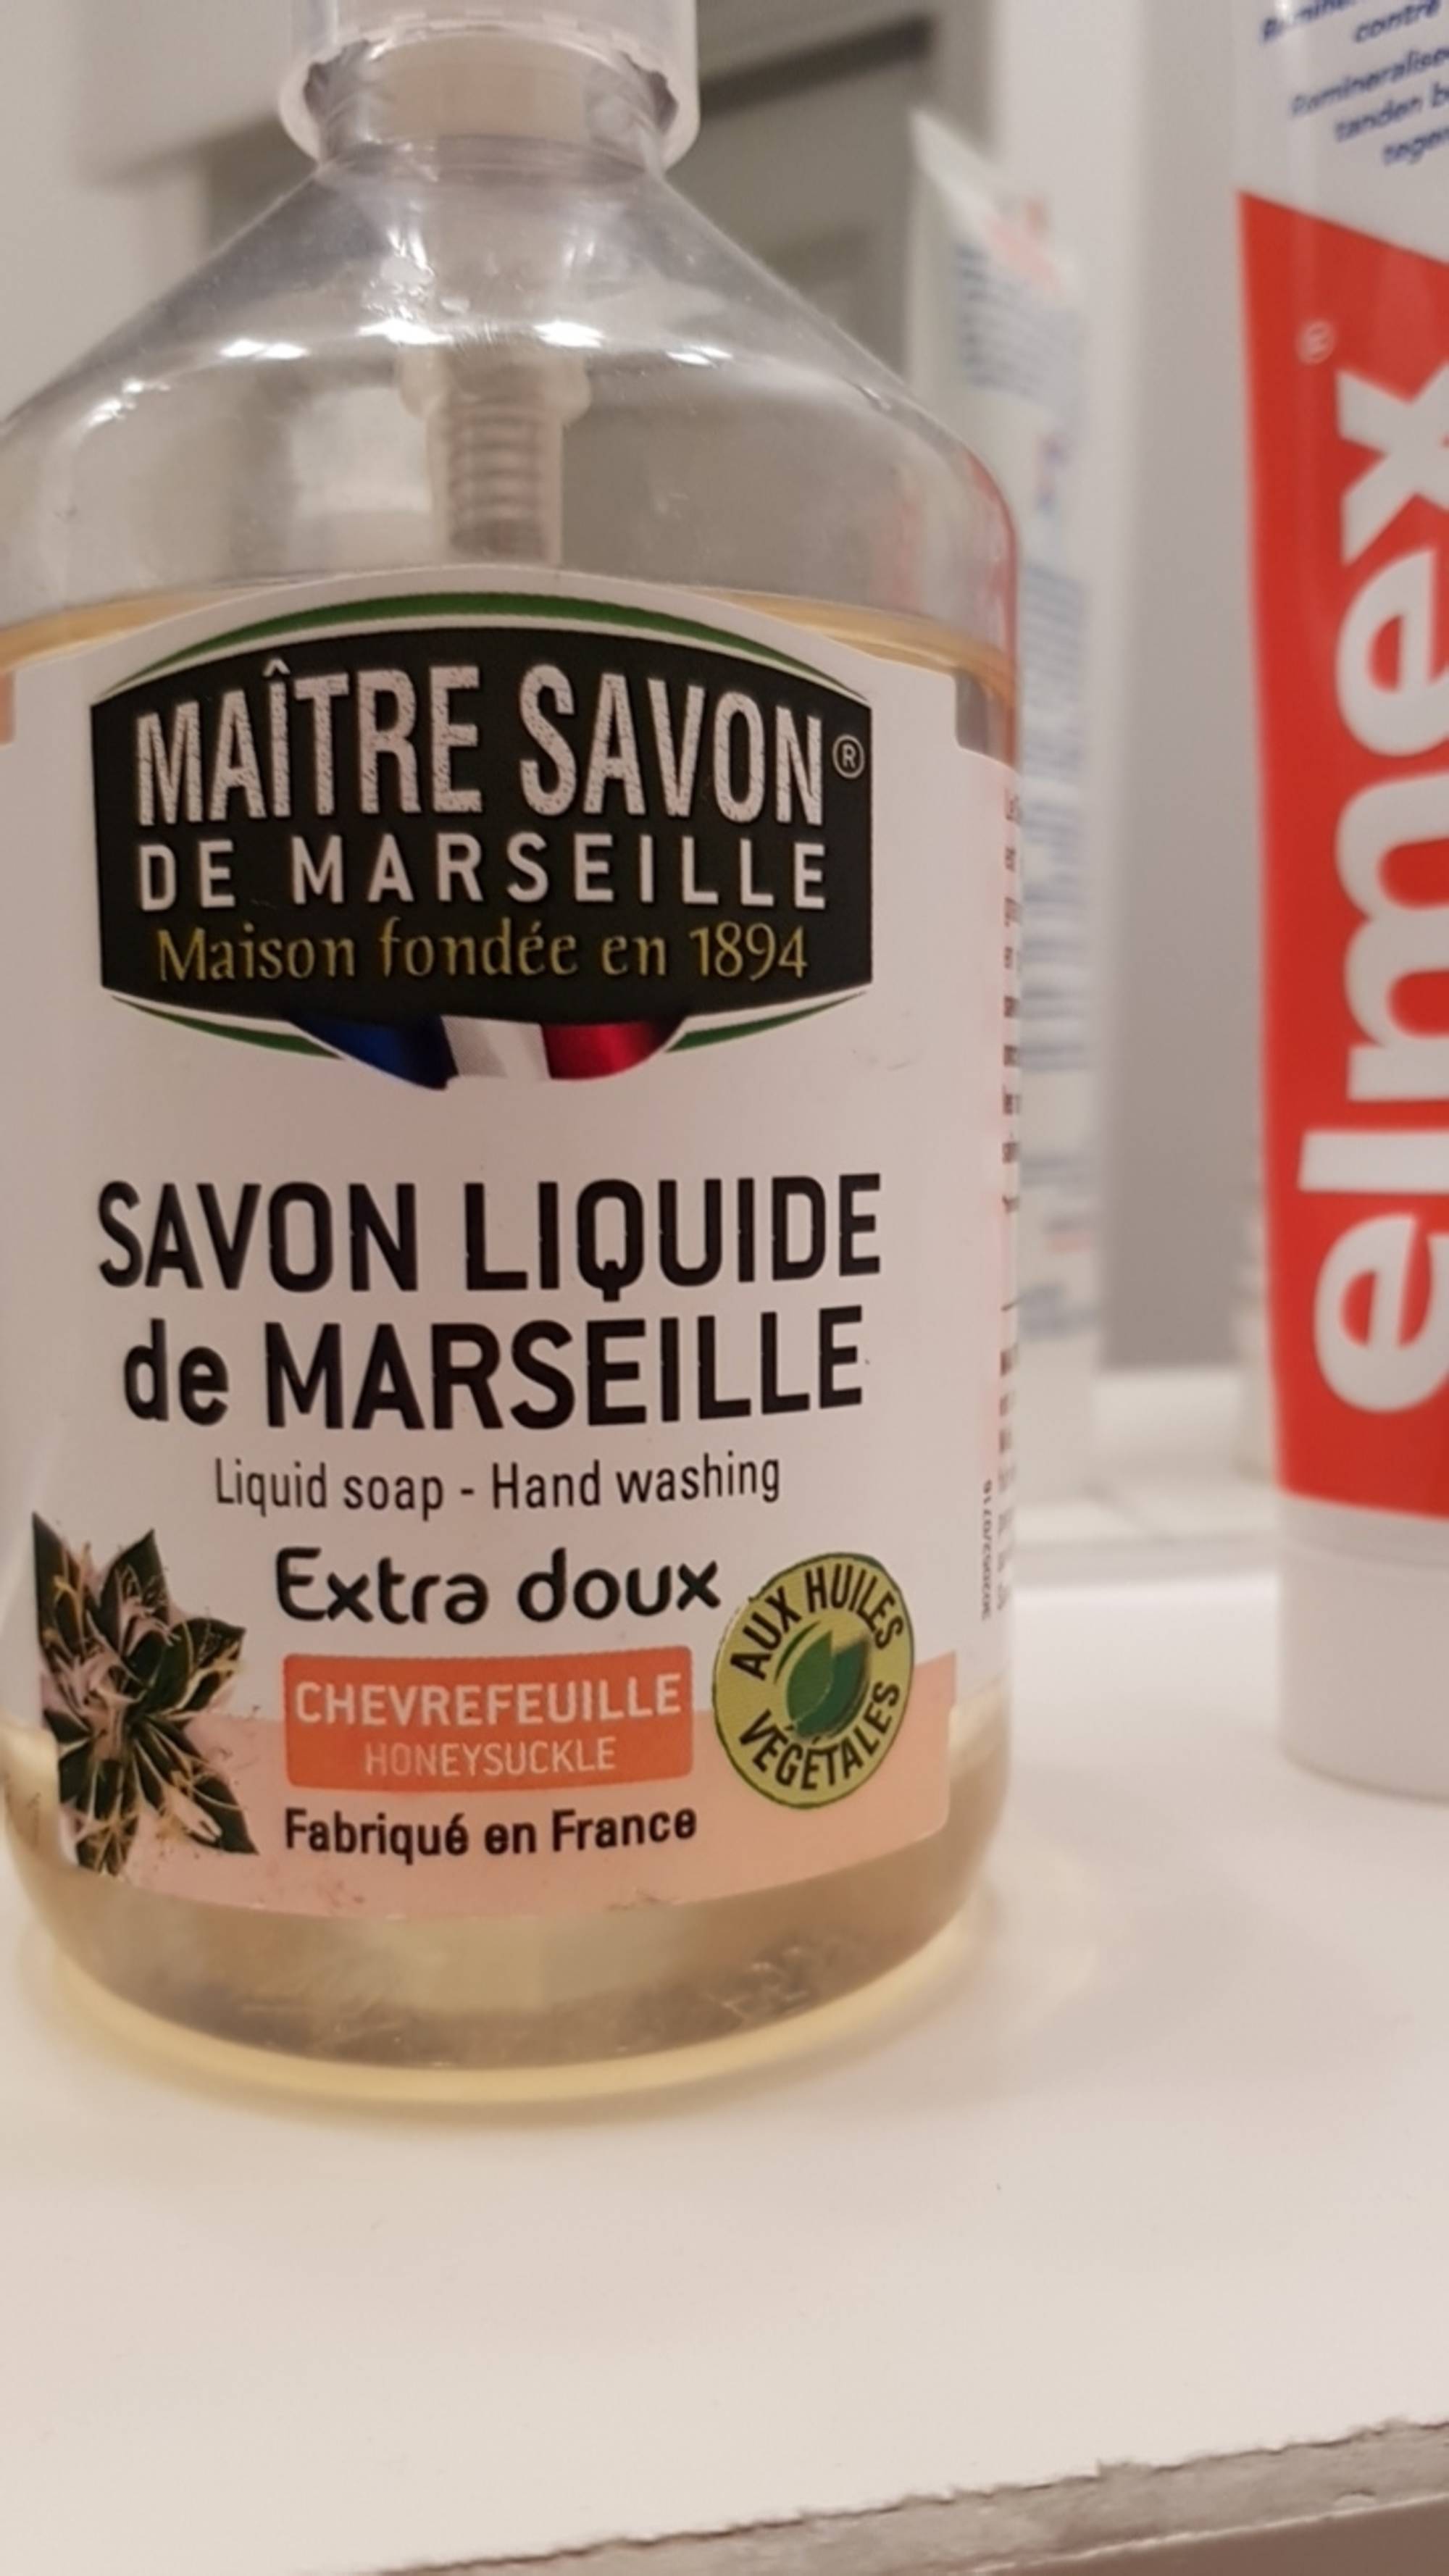 MAÎTRE SAVON DE MARSEILLE - Chèvrefeuille - Savon liquide de Marseille 